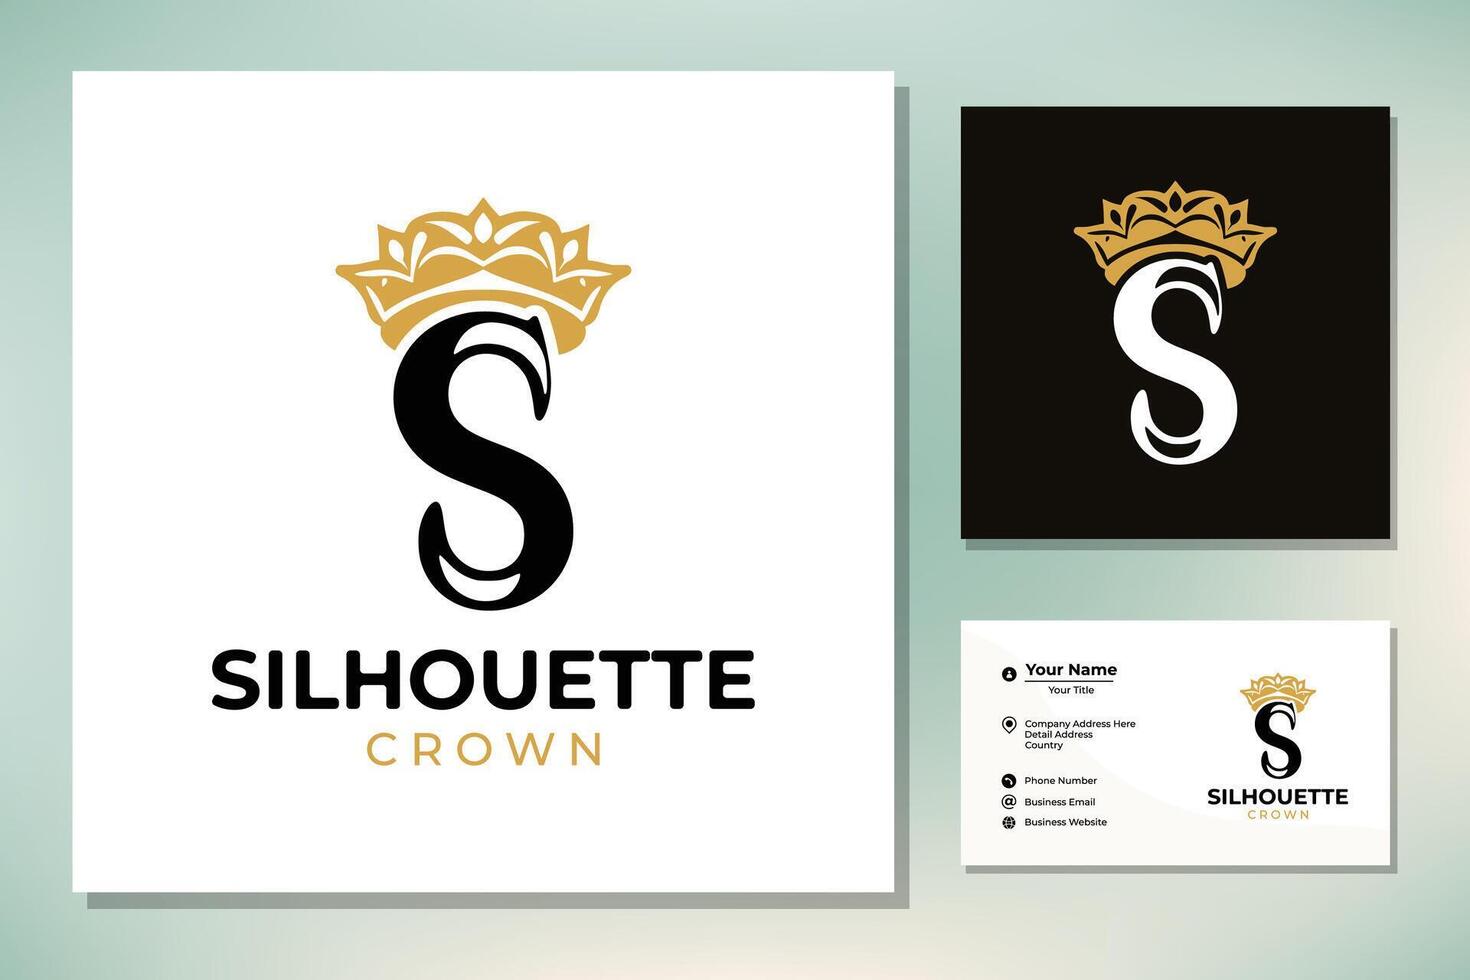 klassiek elegant eerste brief s c met koning koningin kroon voor premie bedrijf merk logo ontwerp vector